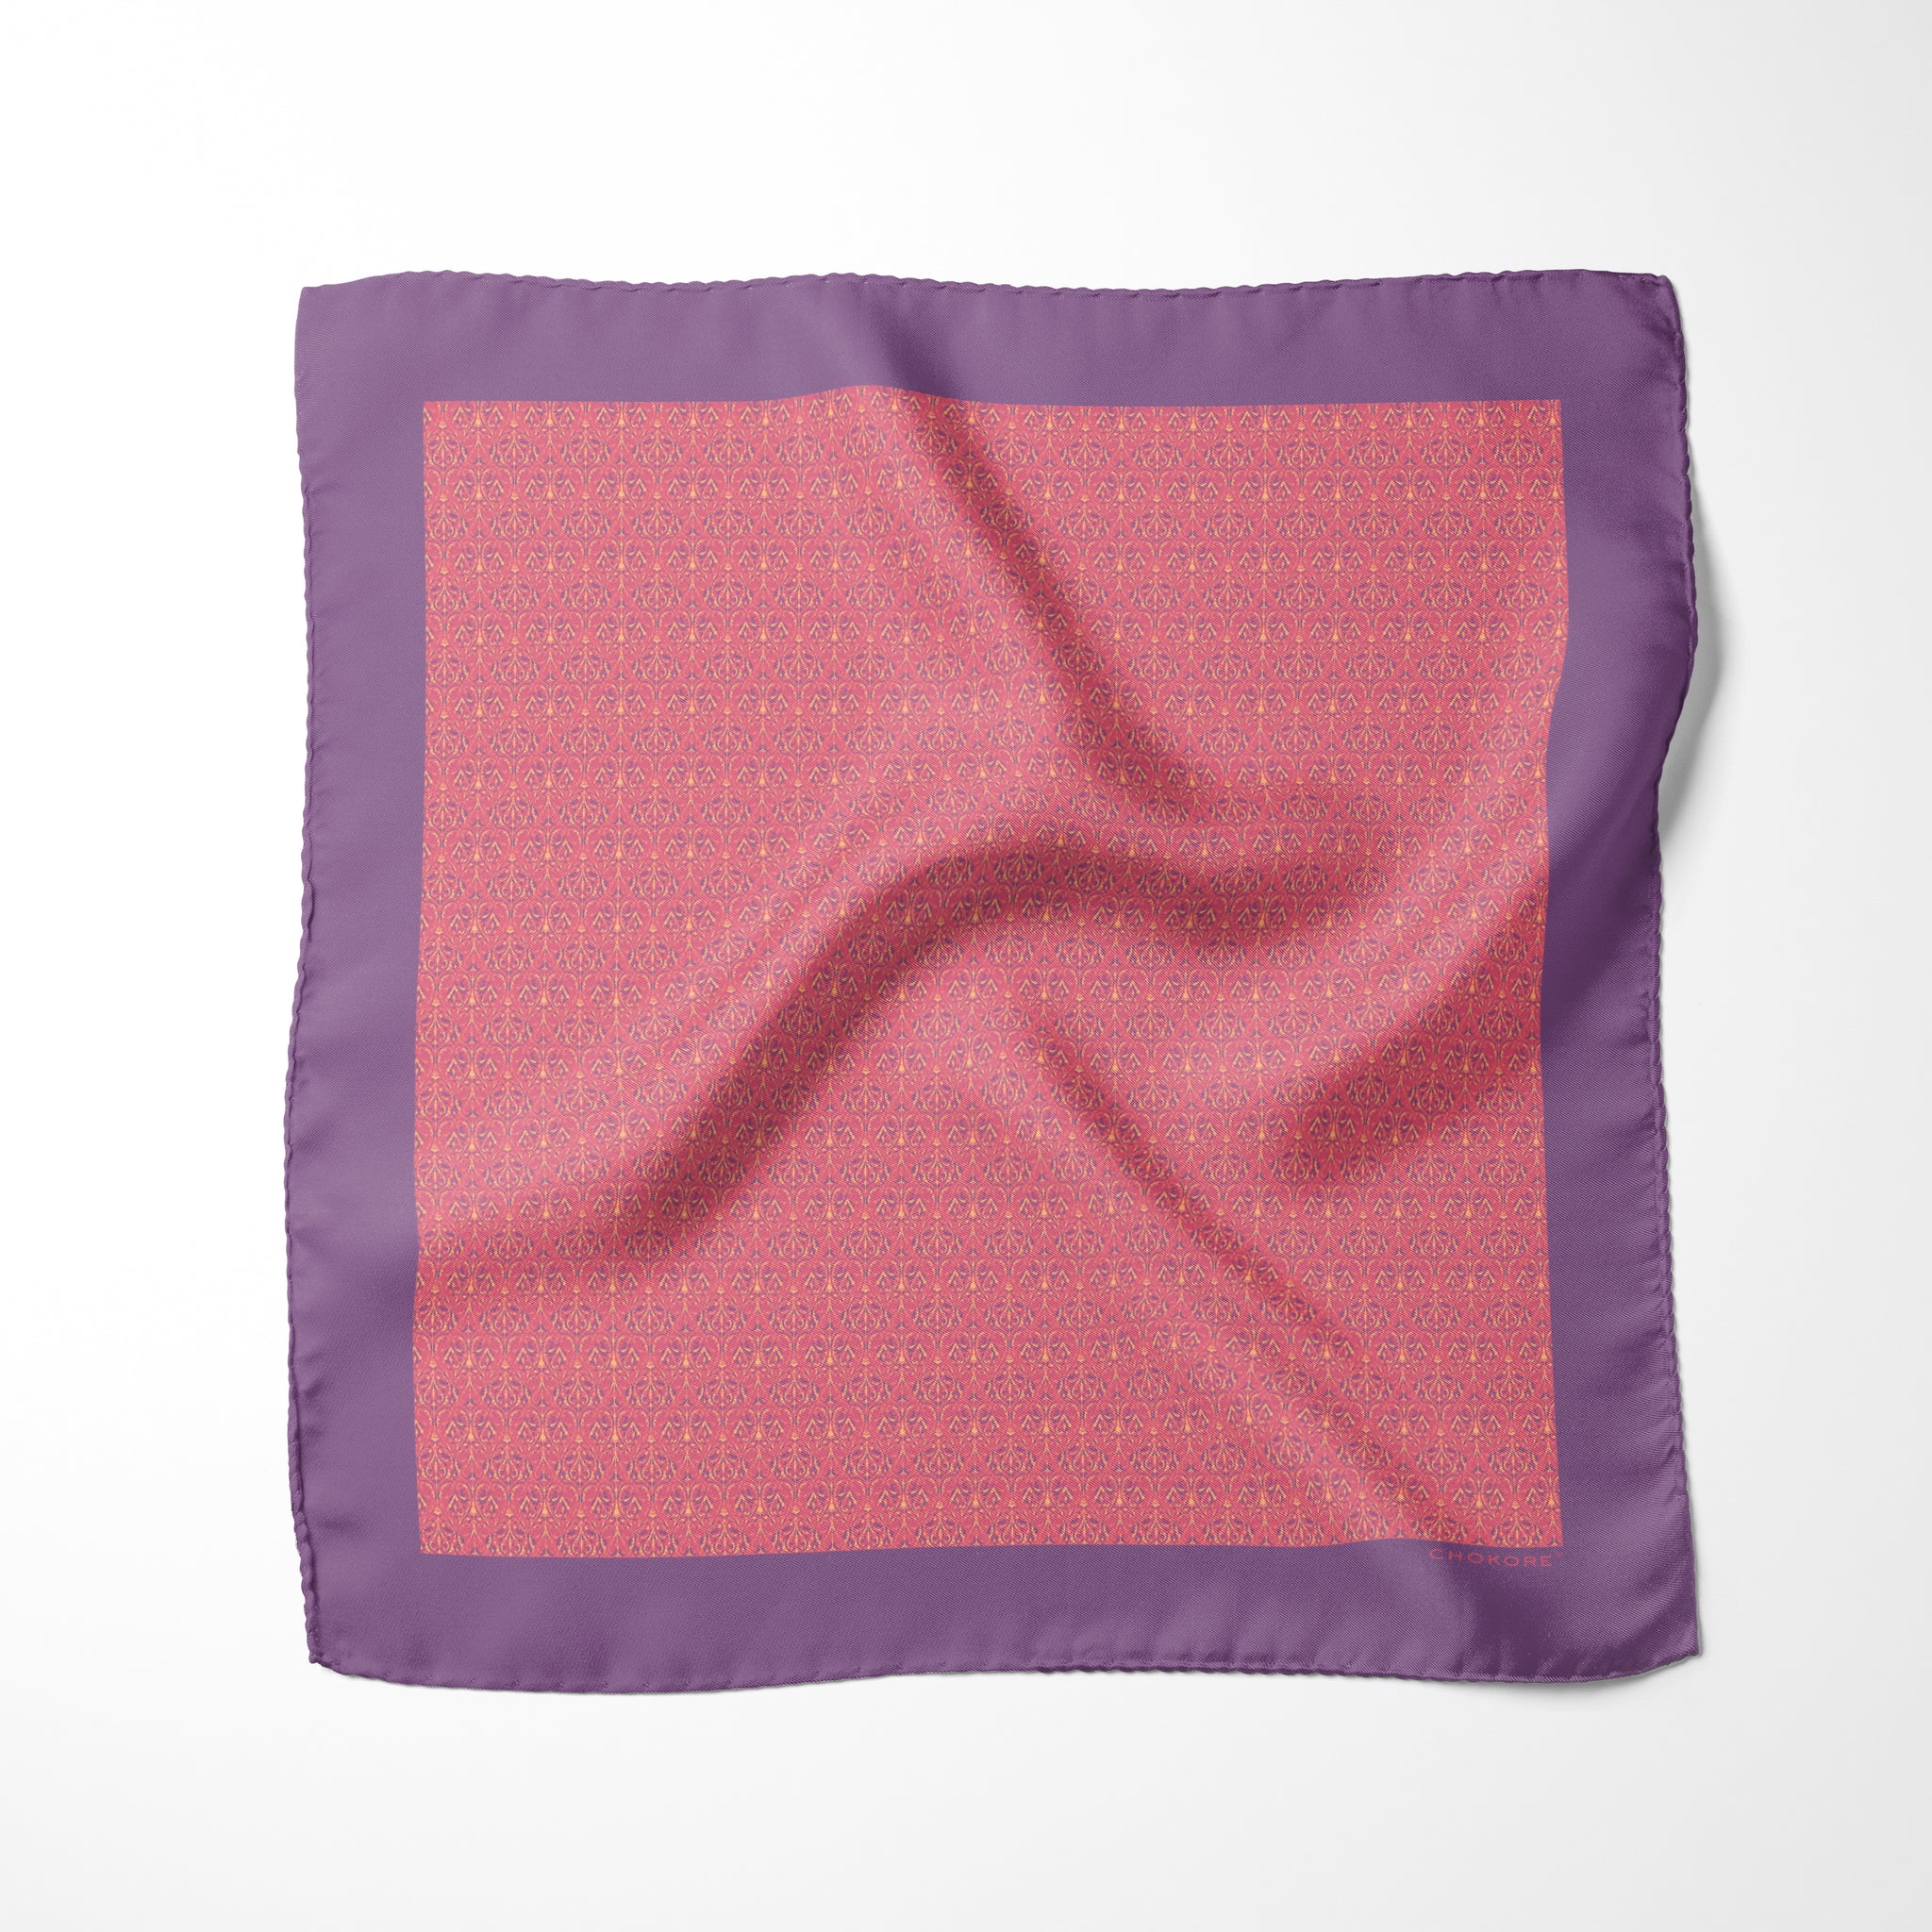 Chokore Pink & Purple Silk Pocket Square - Indian at Heart Range